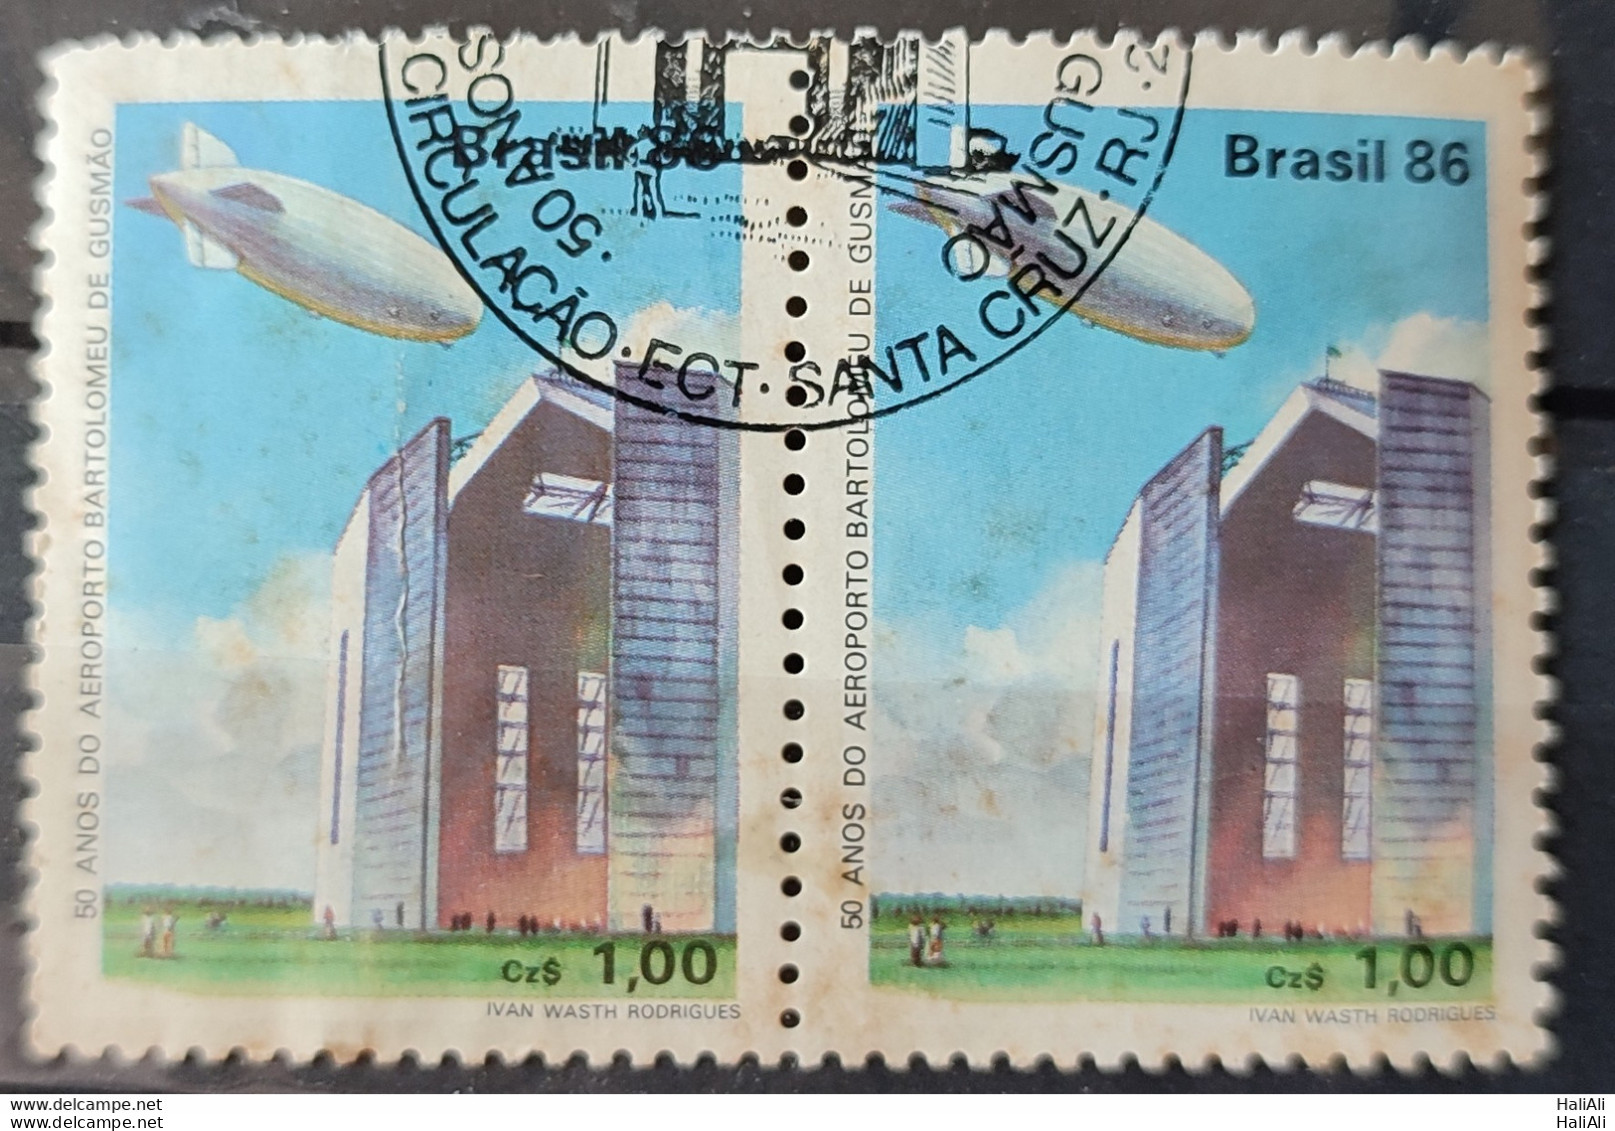 C 1541 Brazil Stamp 50 Years Airport Bartolomeu De Gusmao Balloon Hangar 1986 Dupla Circulated 2.jpg - Gebraucht